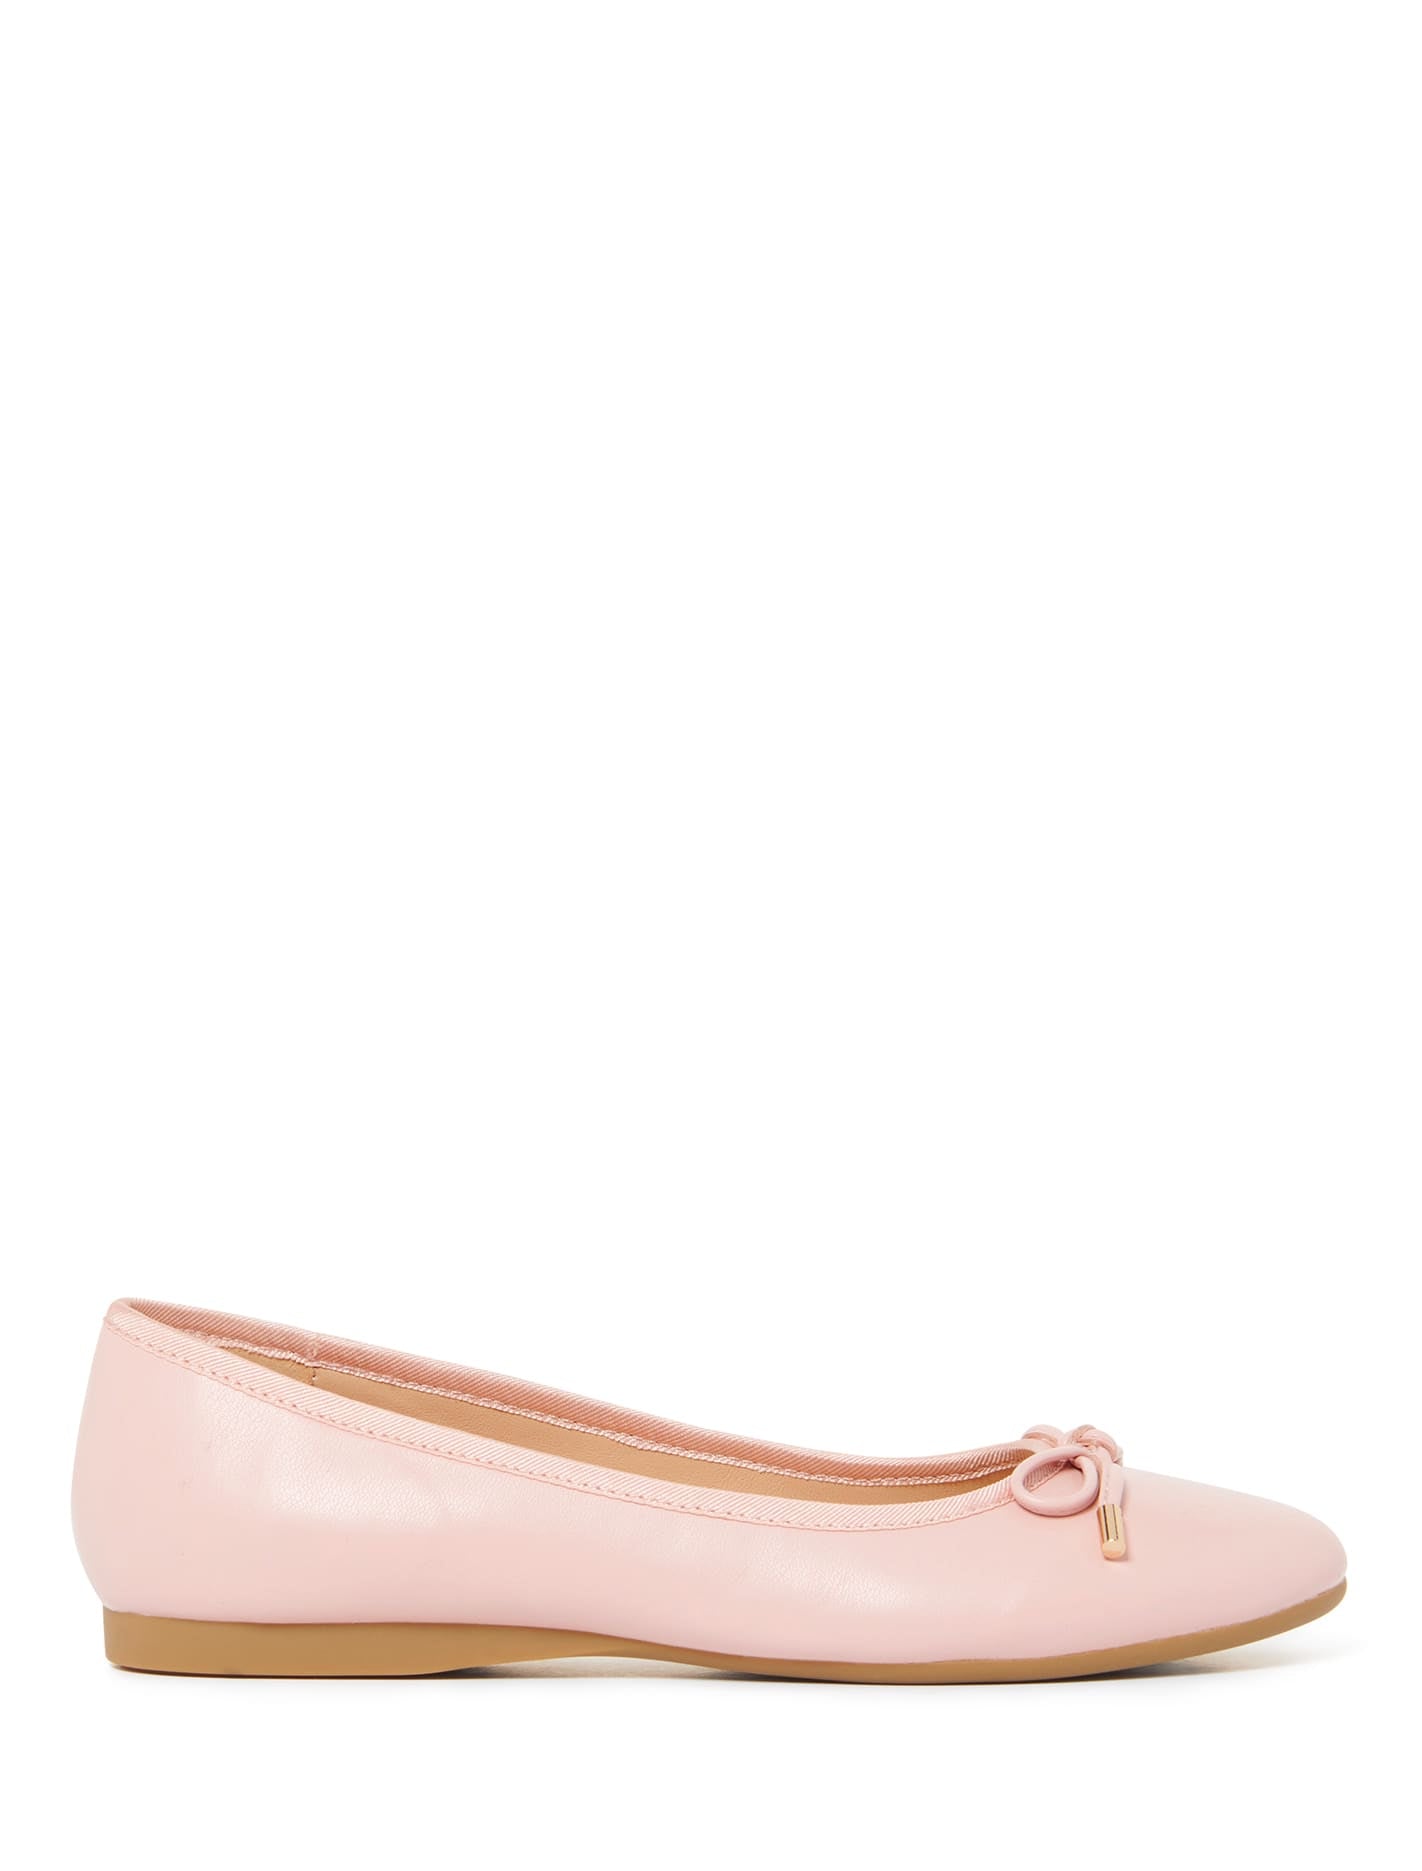 Forever New Shoes | Shop Heels, Sandals, Wedges & Flats Online